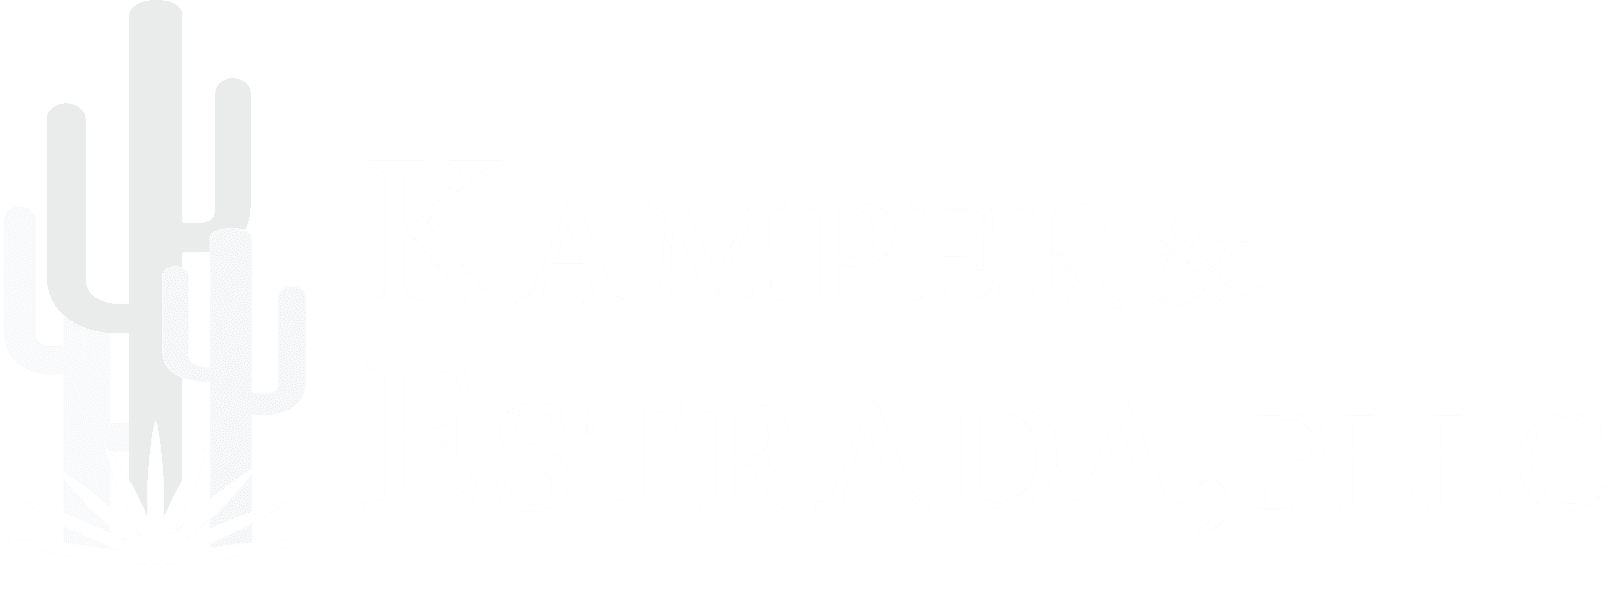 Kamper & Estrada, PLLC